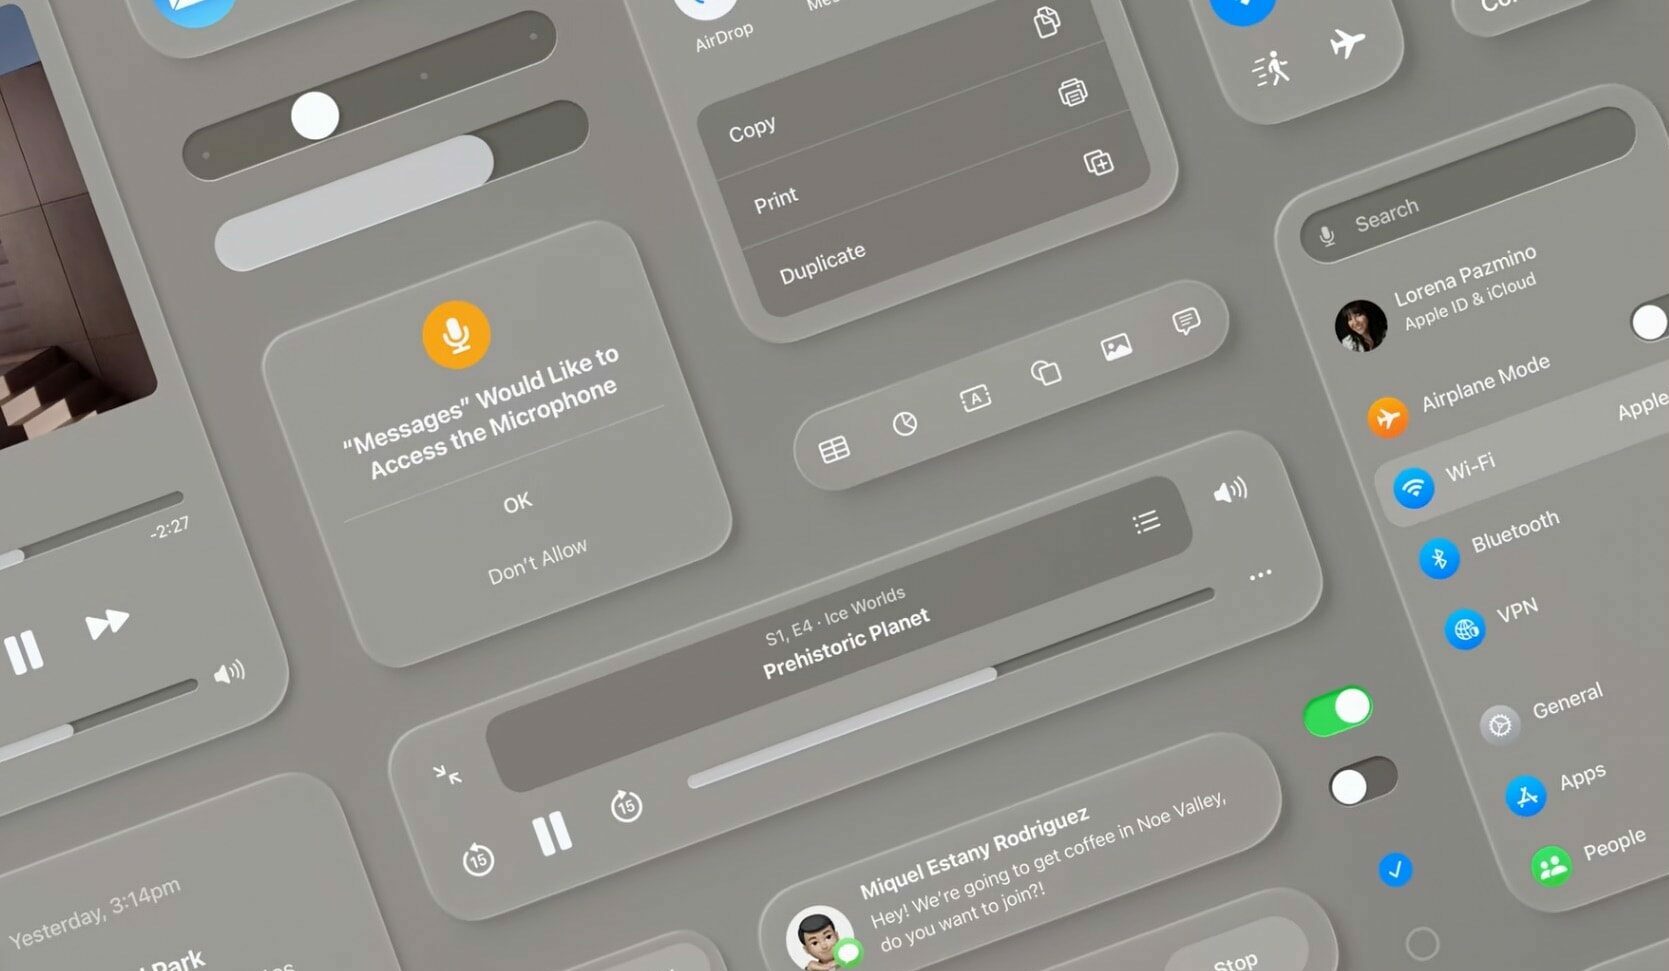 A Glimpse into the Future: visionOS Meets iOS